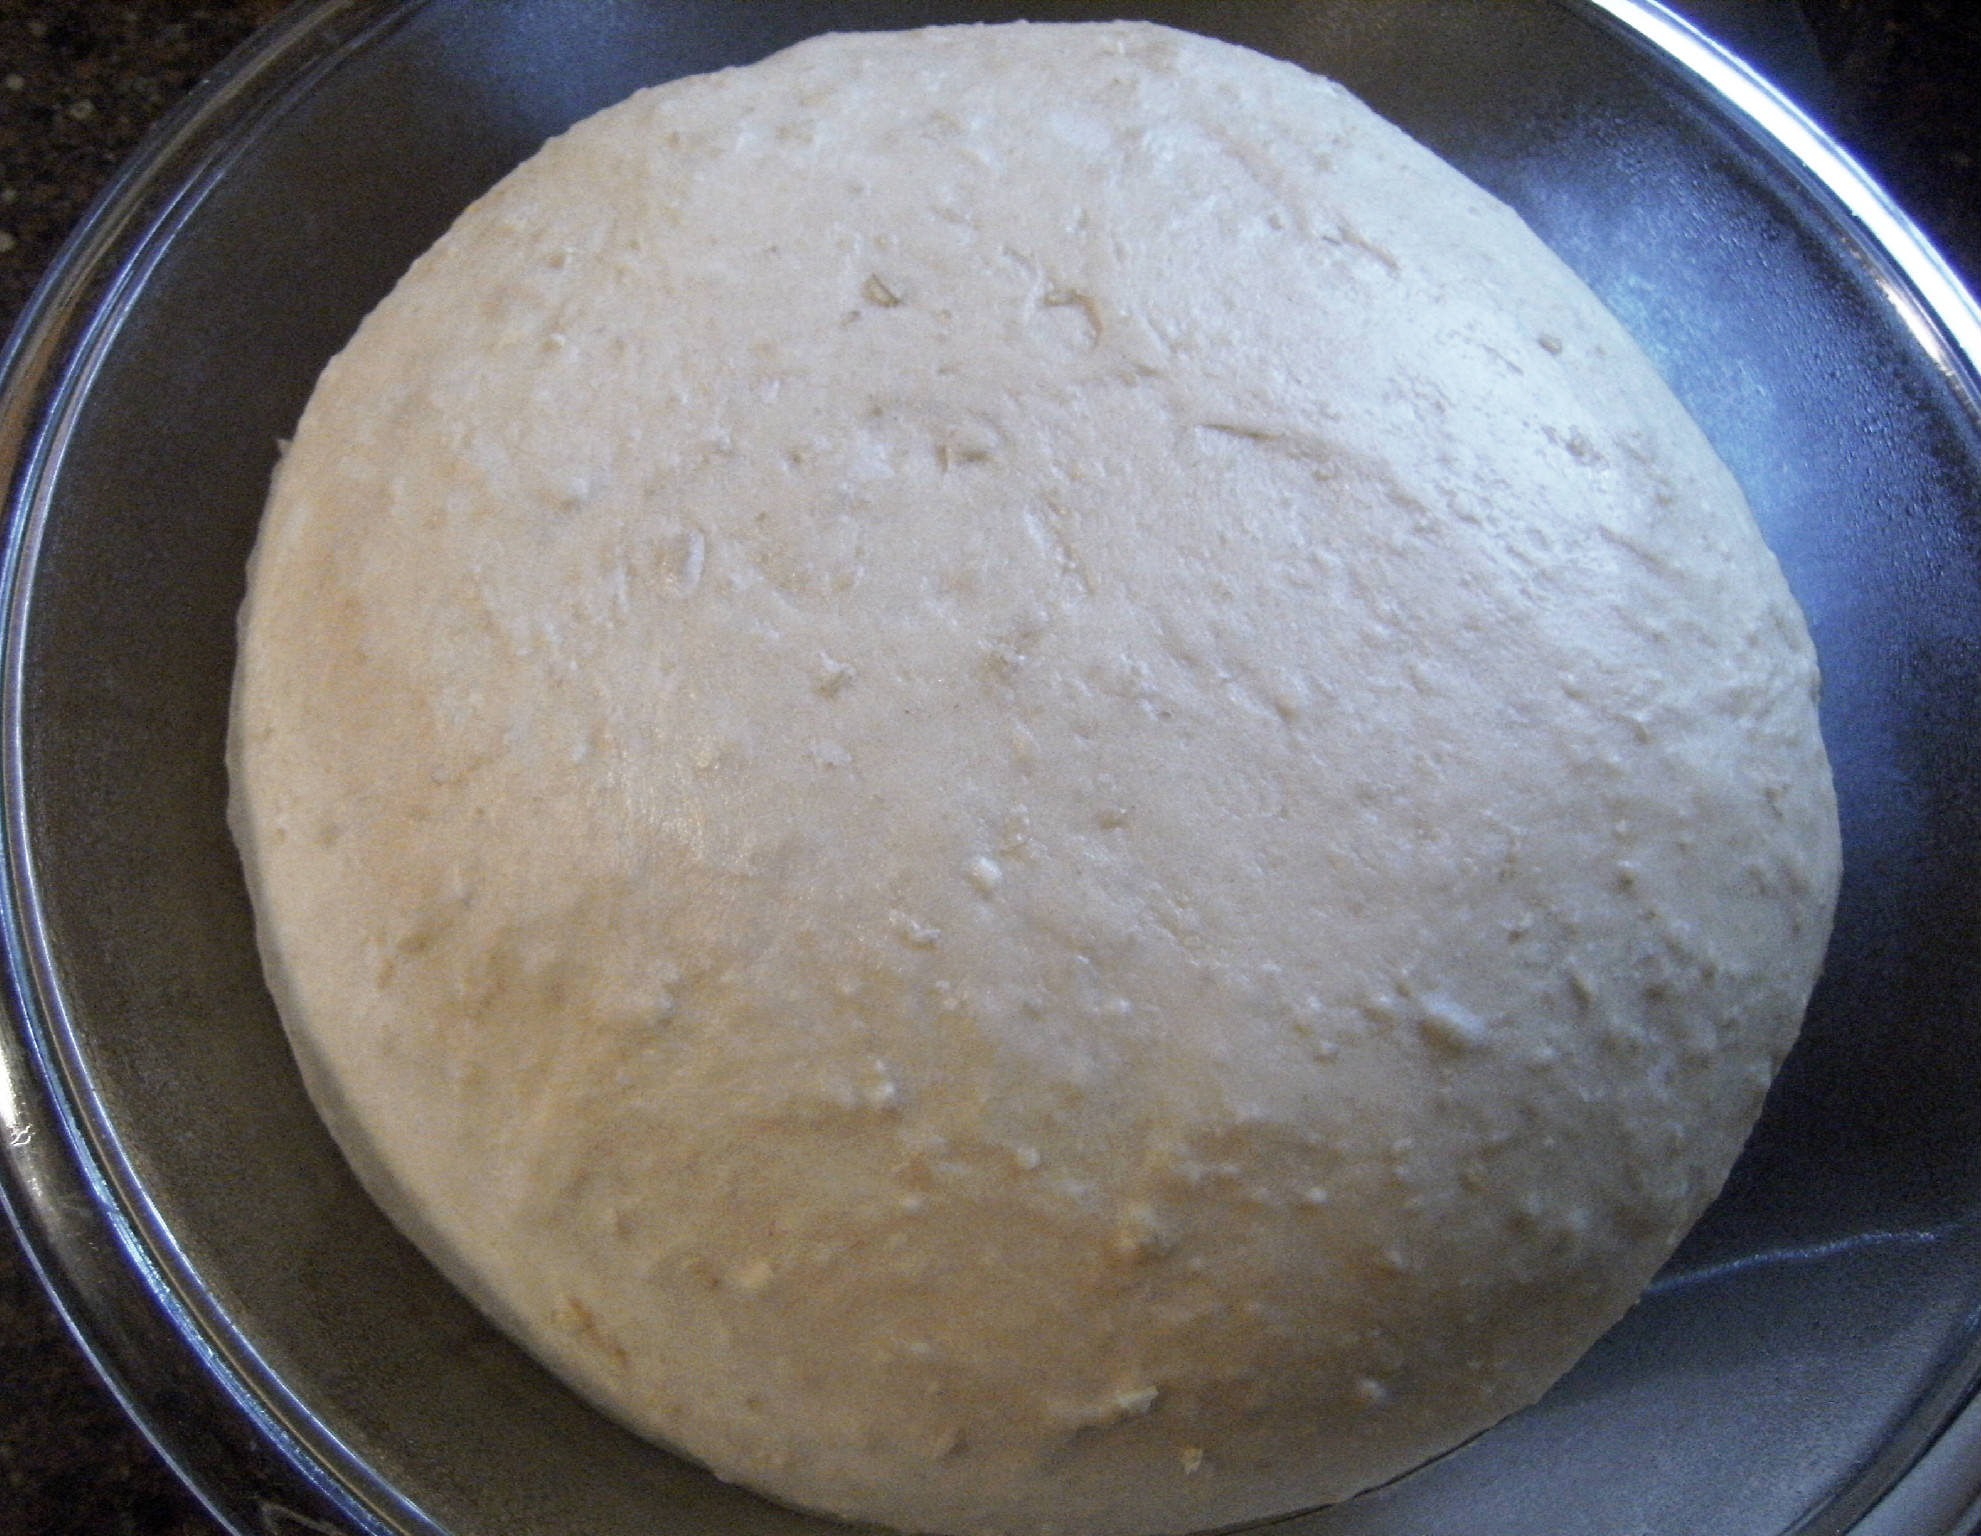 risen bread dough